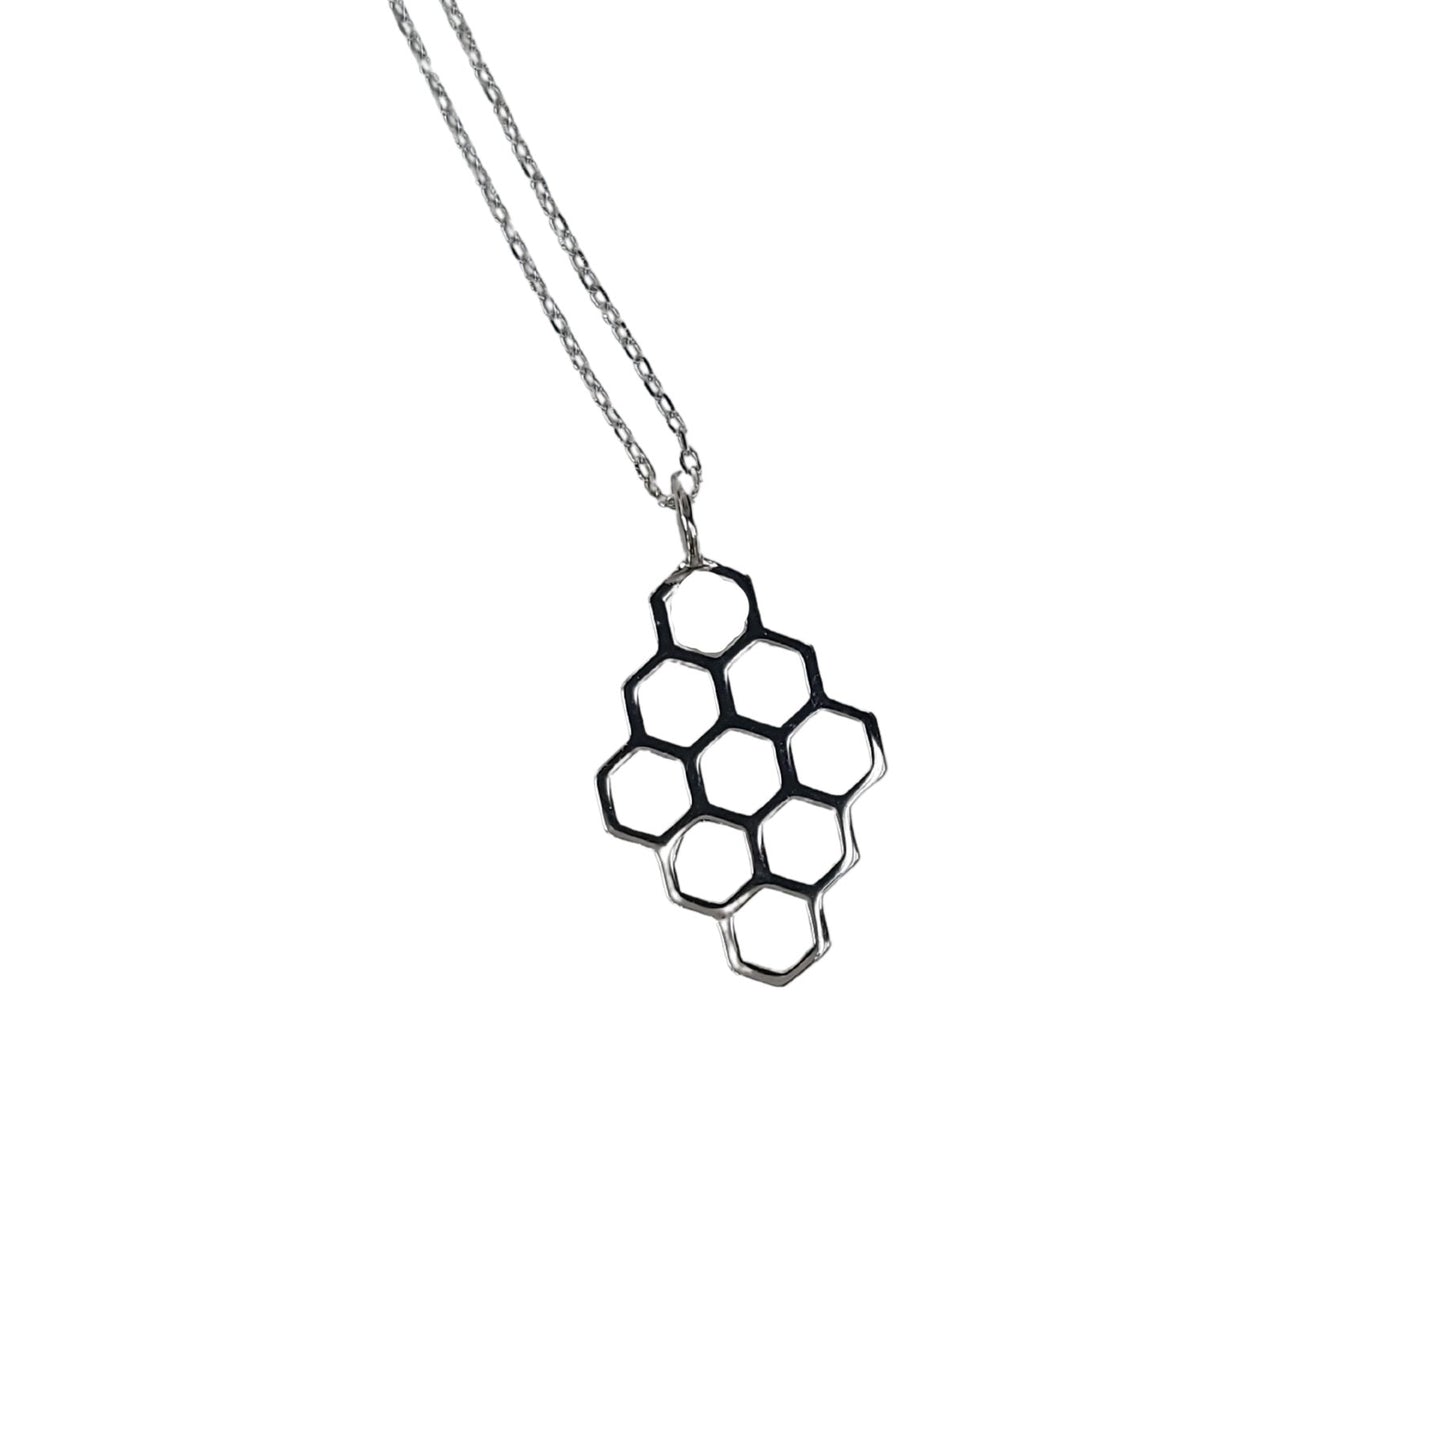 9 hexagons forming diamond shaped pendant. Silver petite honeycomb pendant necklace